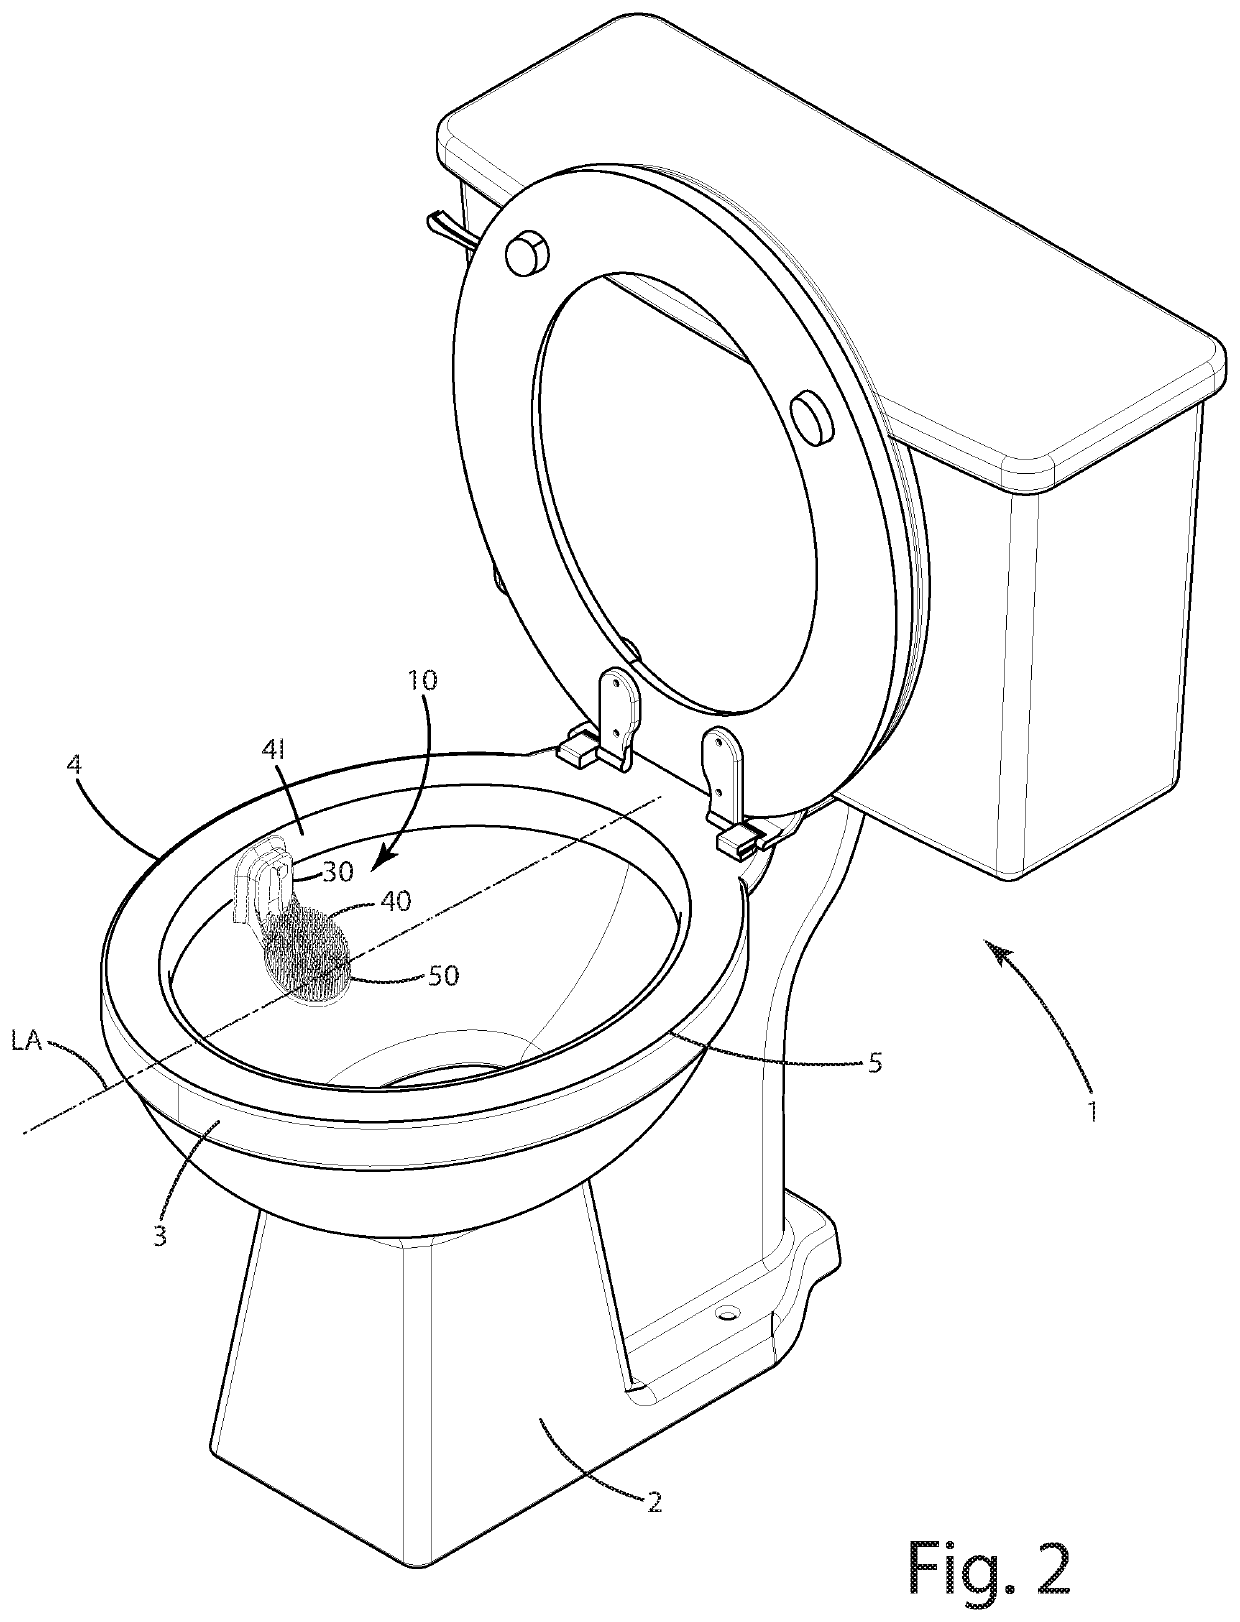 Toilet splash guard device